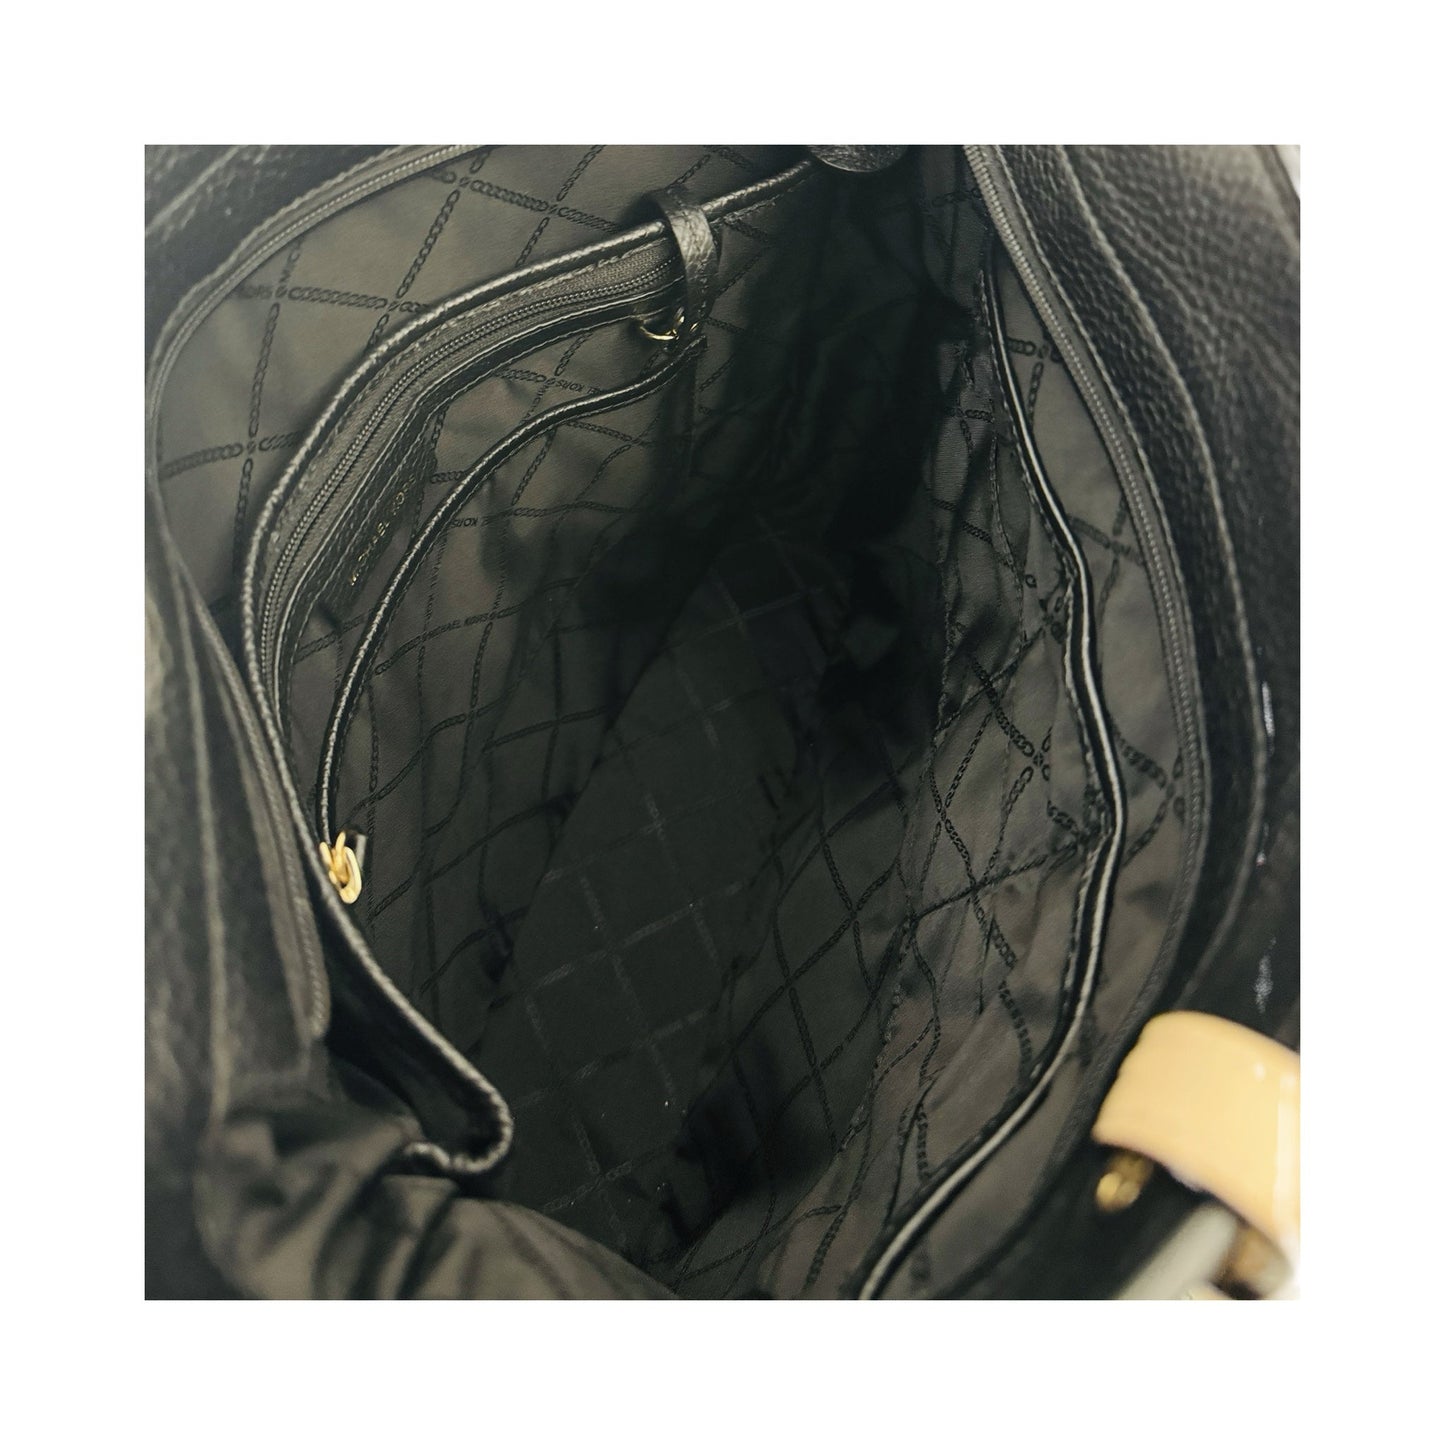 Bedford Leather Dual Beige Handles Gold-Tone Hardware Top-Zip Closure Tote Handbag By Michael Kors  Size: Large